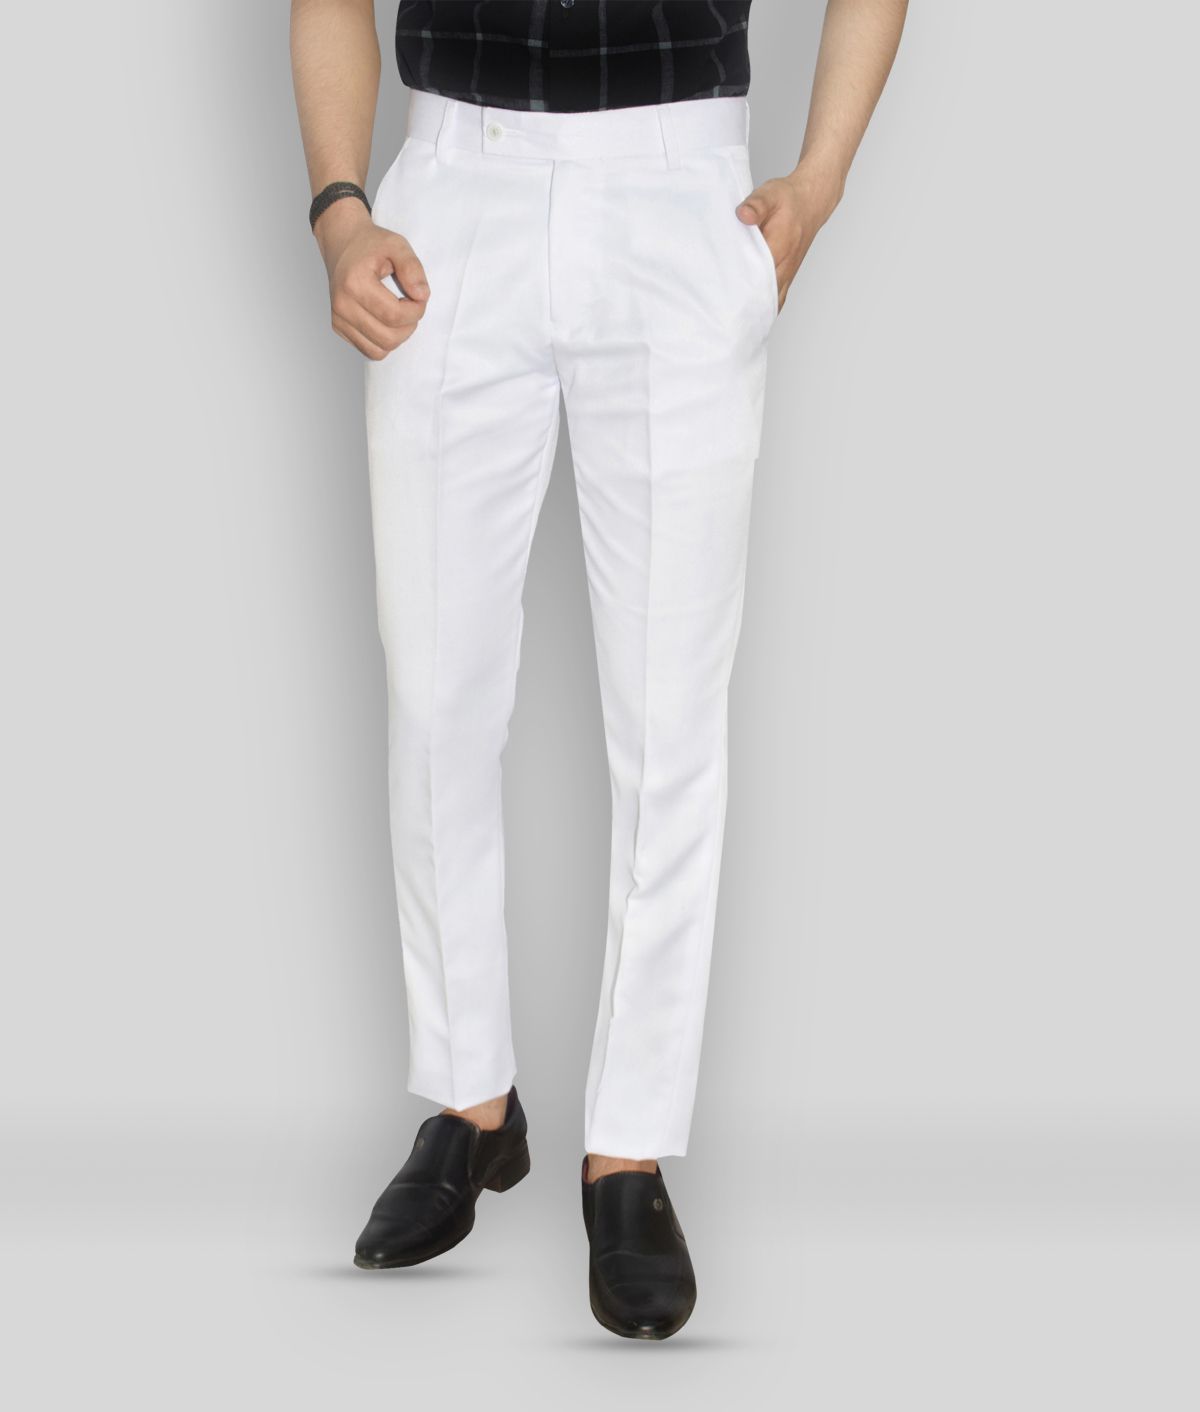 Kundan - White Polycotton Slim - Fit Men's Formal Pants ( Pack of 1 )